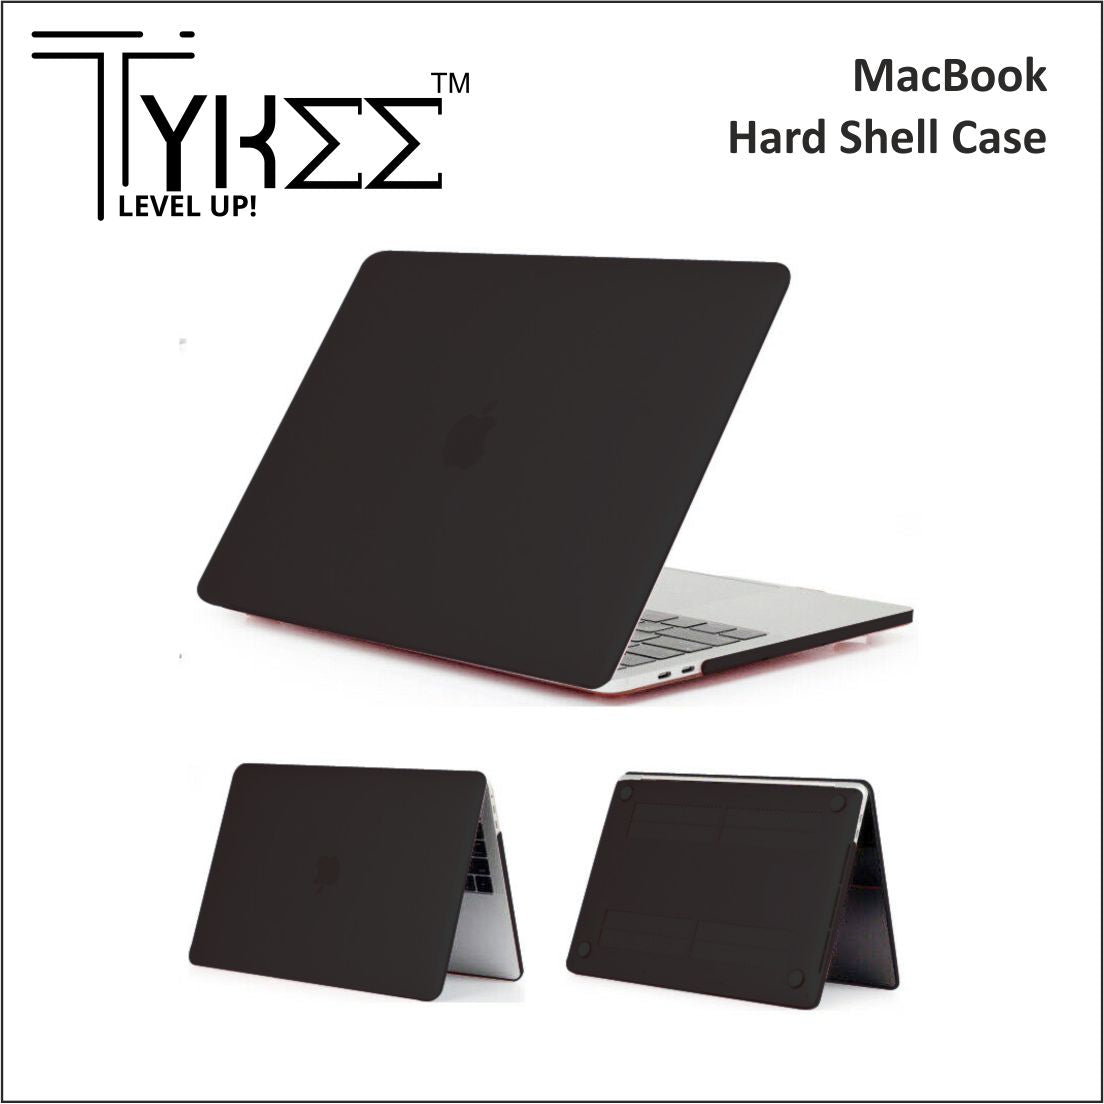 MacBook Cases